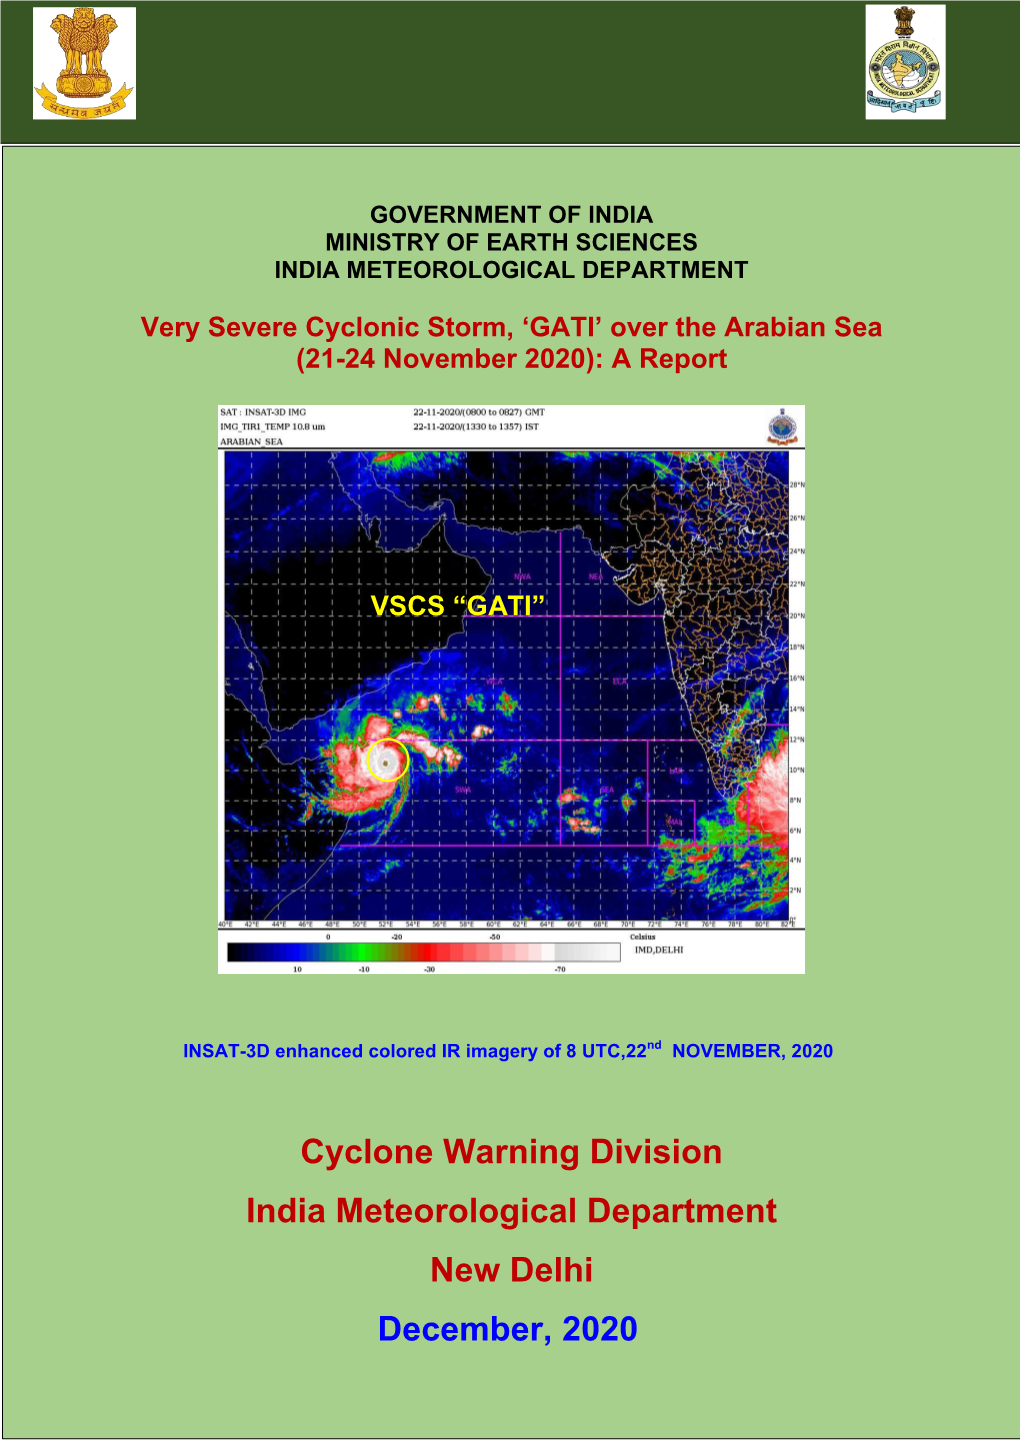 Cyclone Warning Division India Meteorological Department New Delhi December, 2020